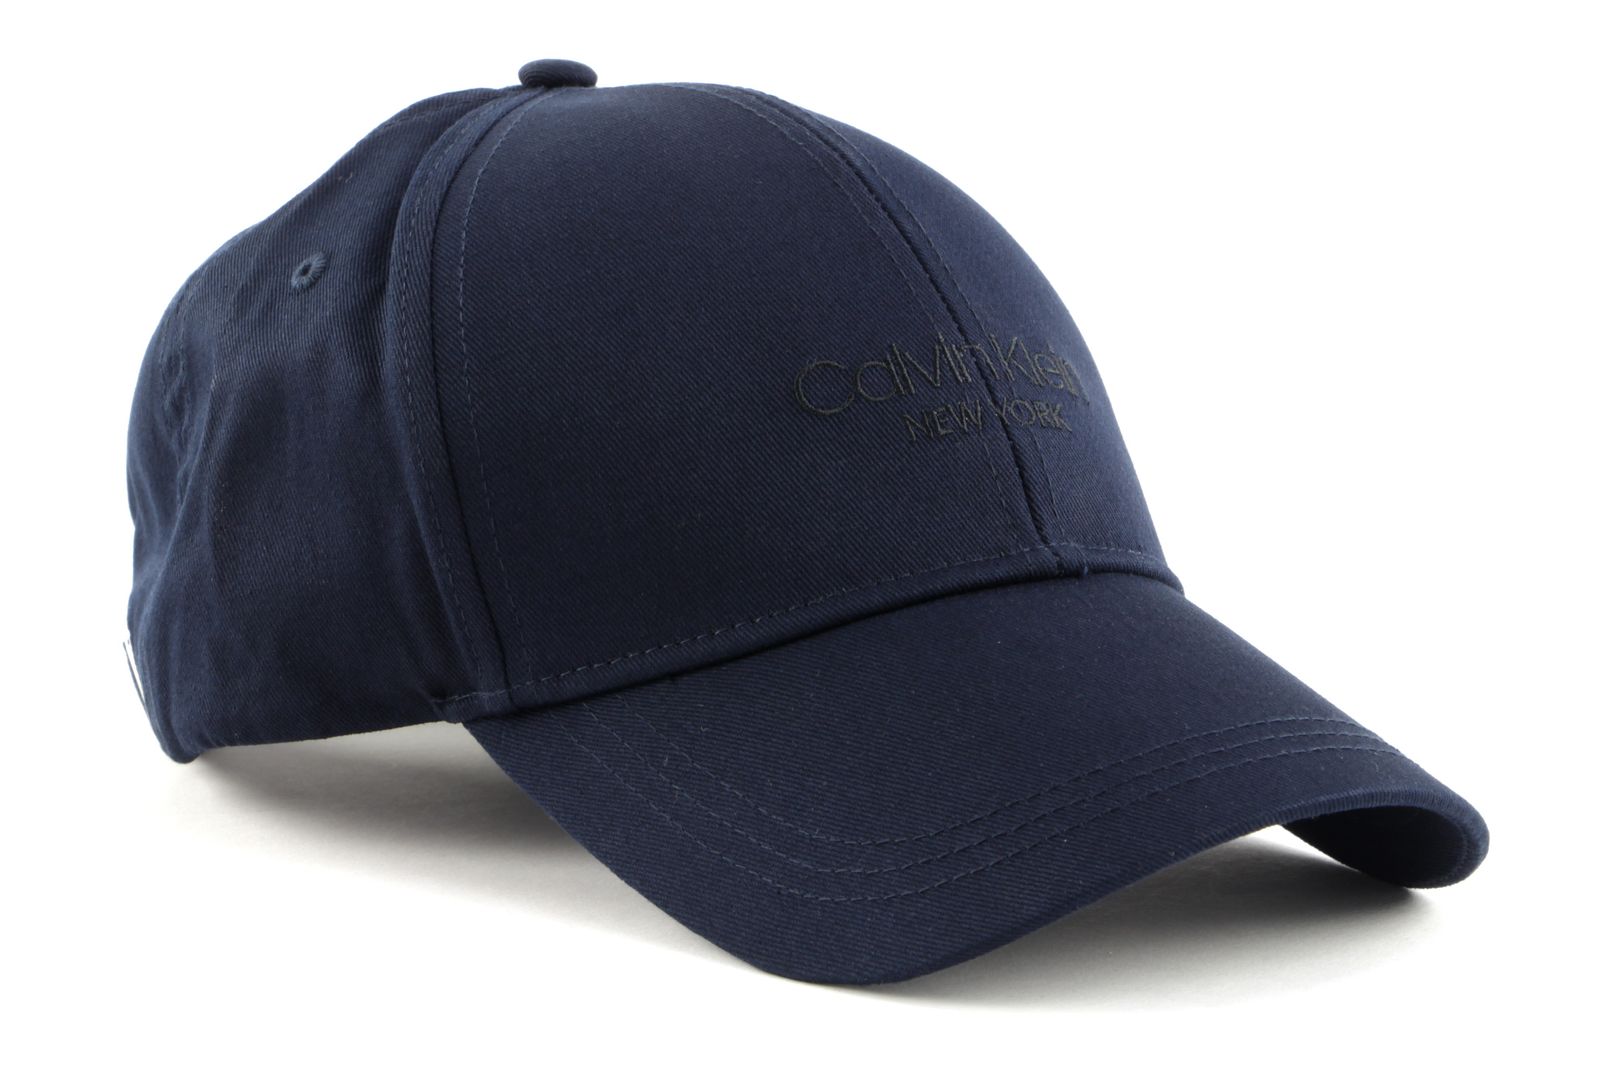 & Cap online BB Cap bags, Klein modeherz purses Navy accessories Calvin | Buy | CK